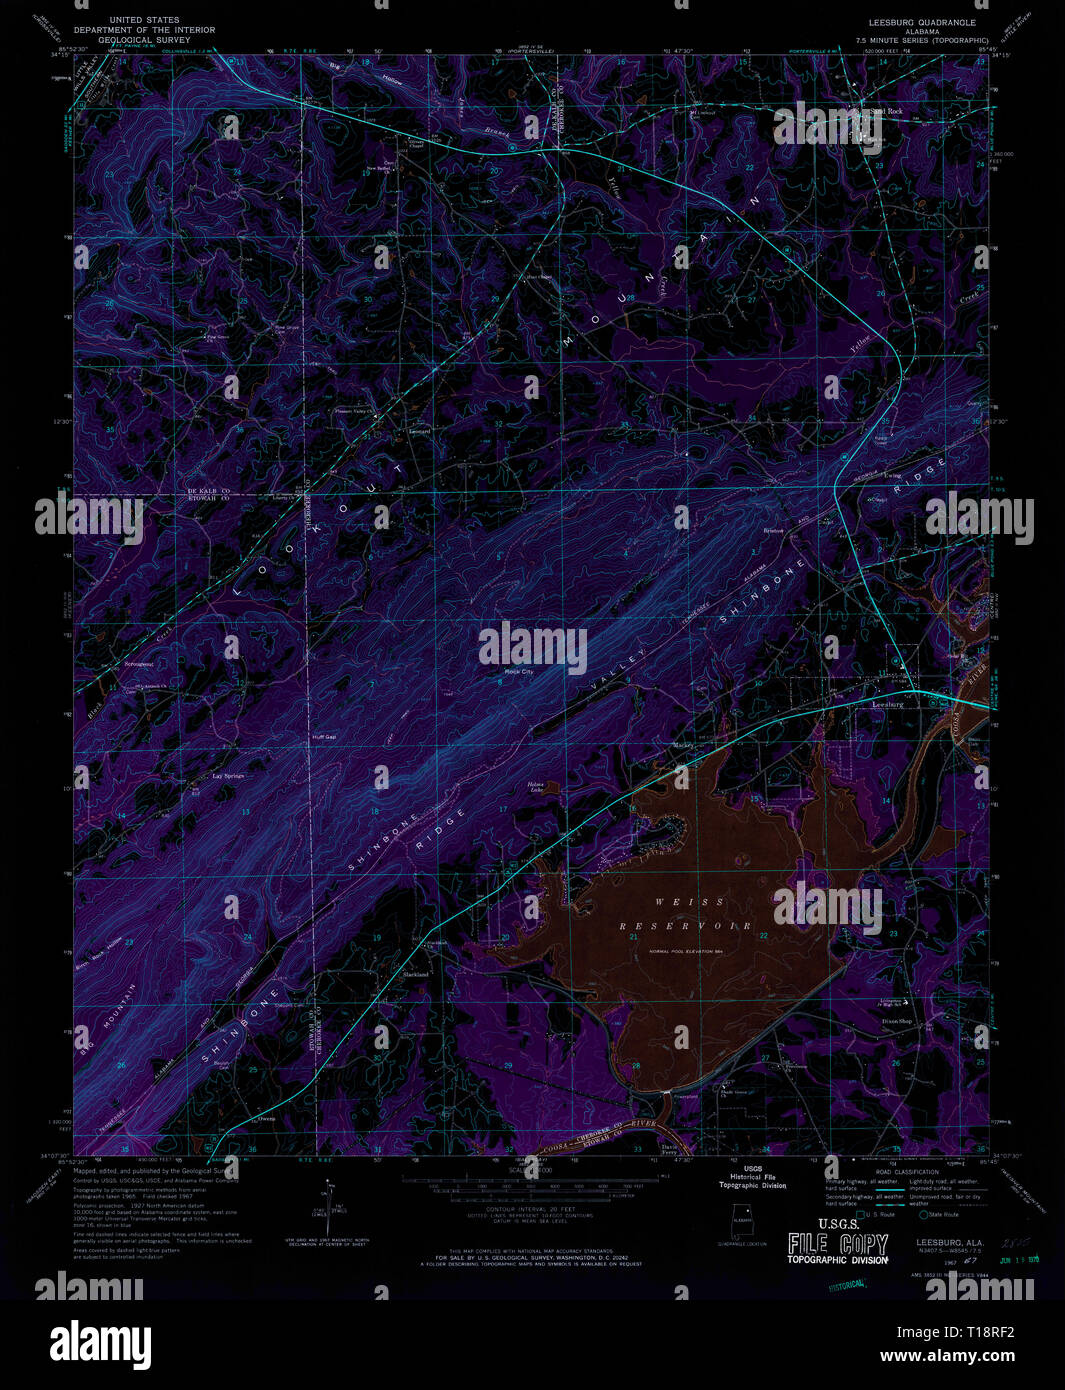 USGS TOPO Map Alabama AL Leesburg 304396 1967 24000 Inverted Stock Photo